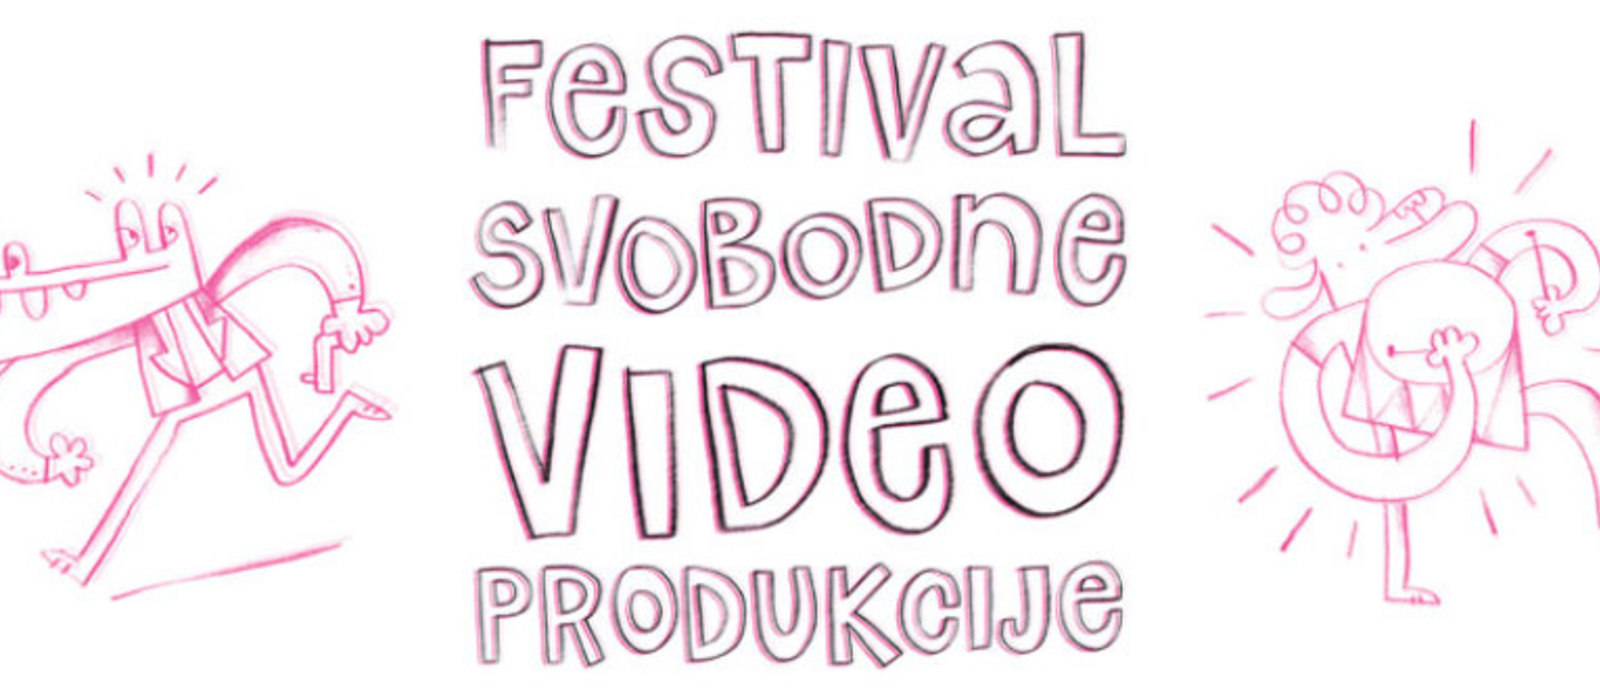 7. Festival svobodne video produkcije – FSVP 2020